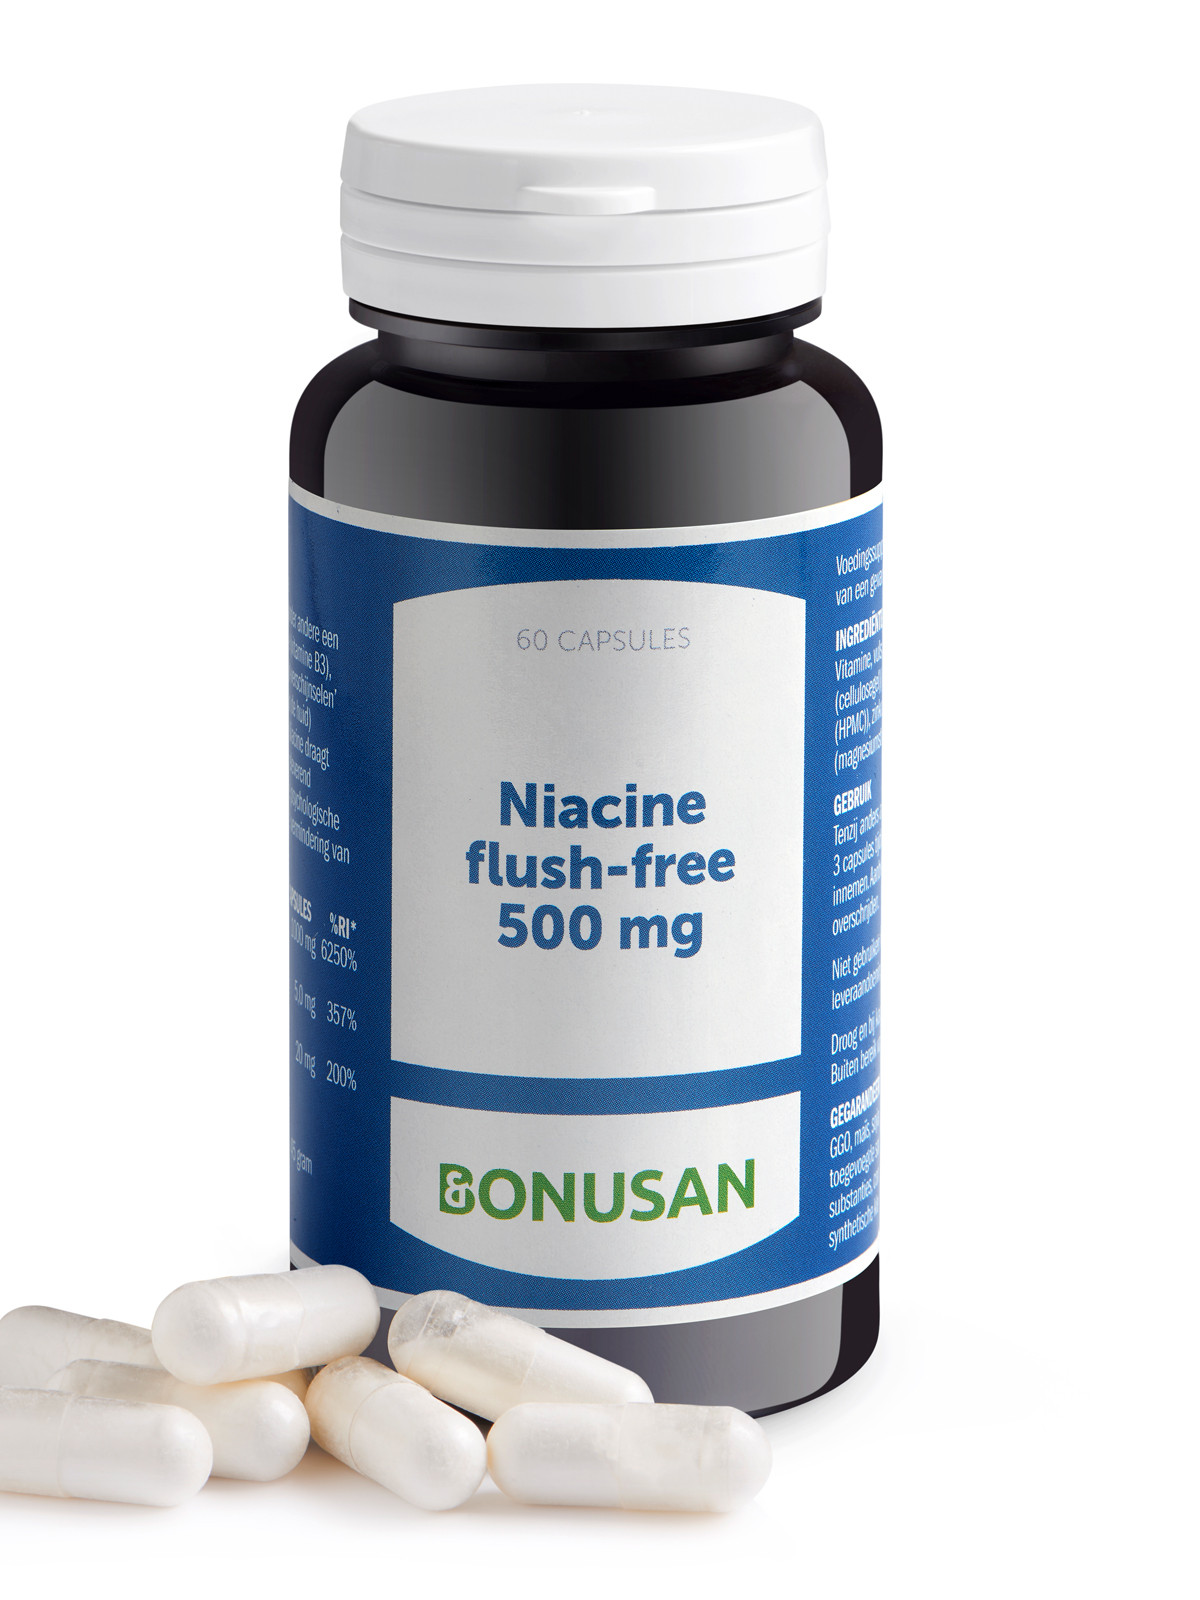 Niacine flush free 500 mg